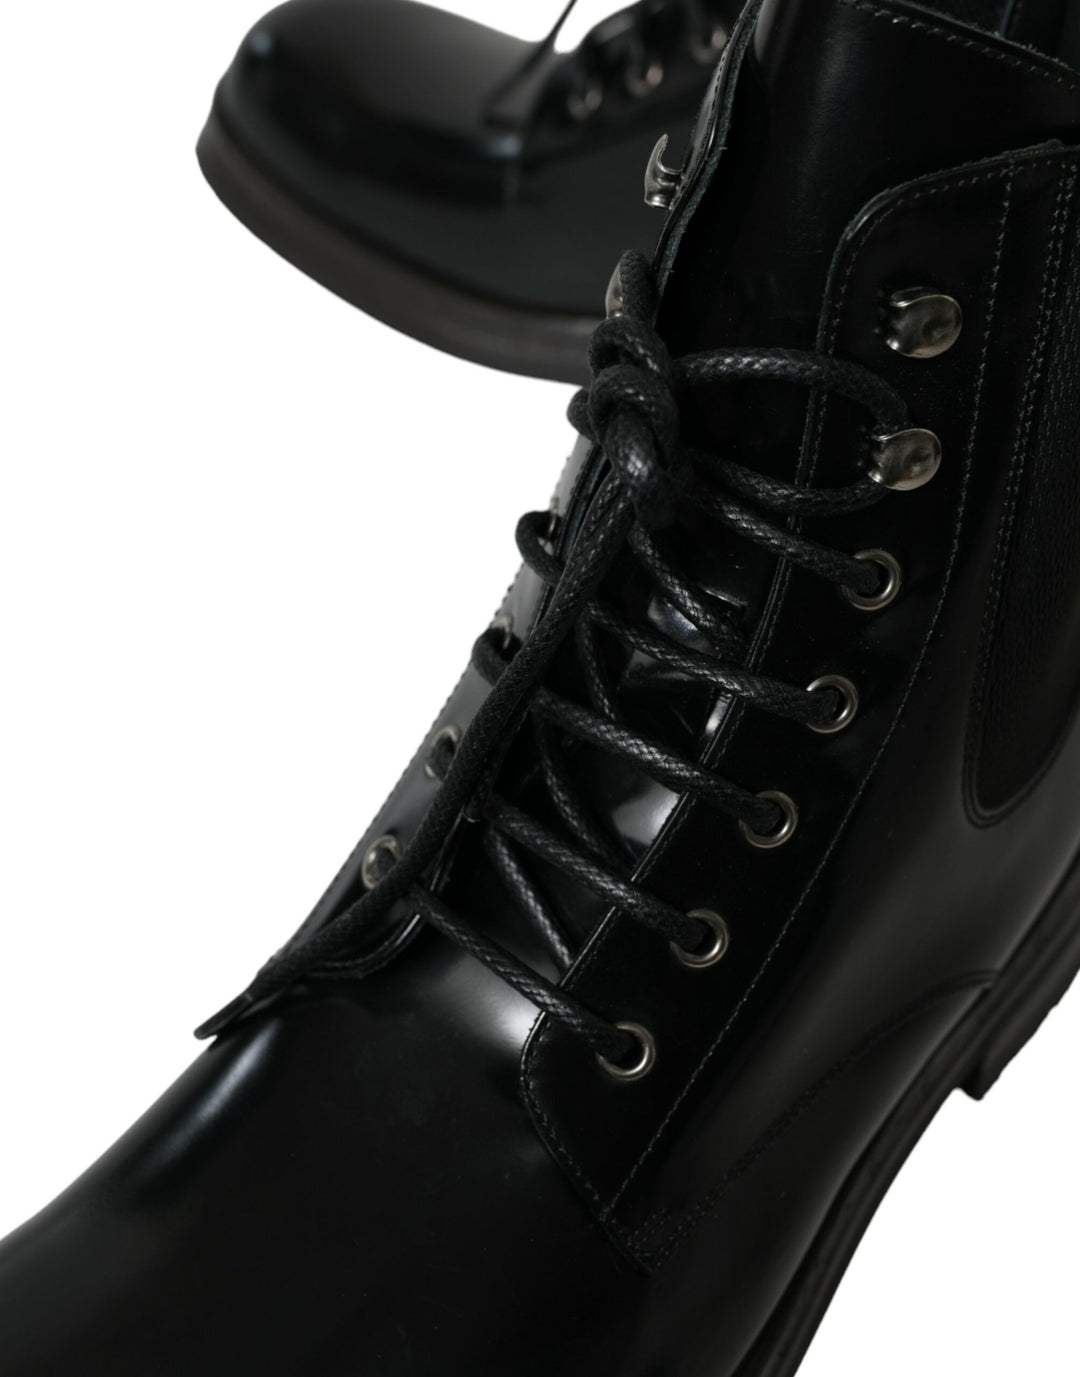 Dolce & Gabbana Elegant Black Leather Mid Calf Men's Boots